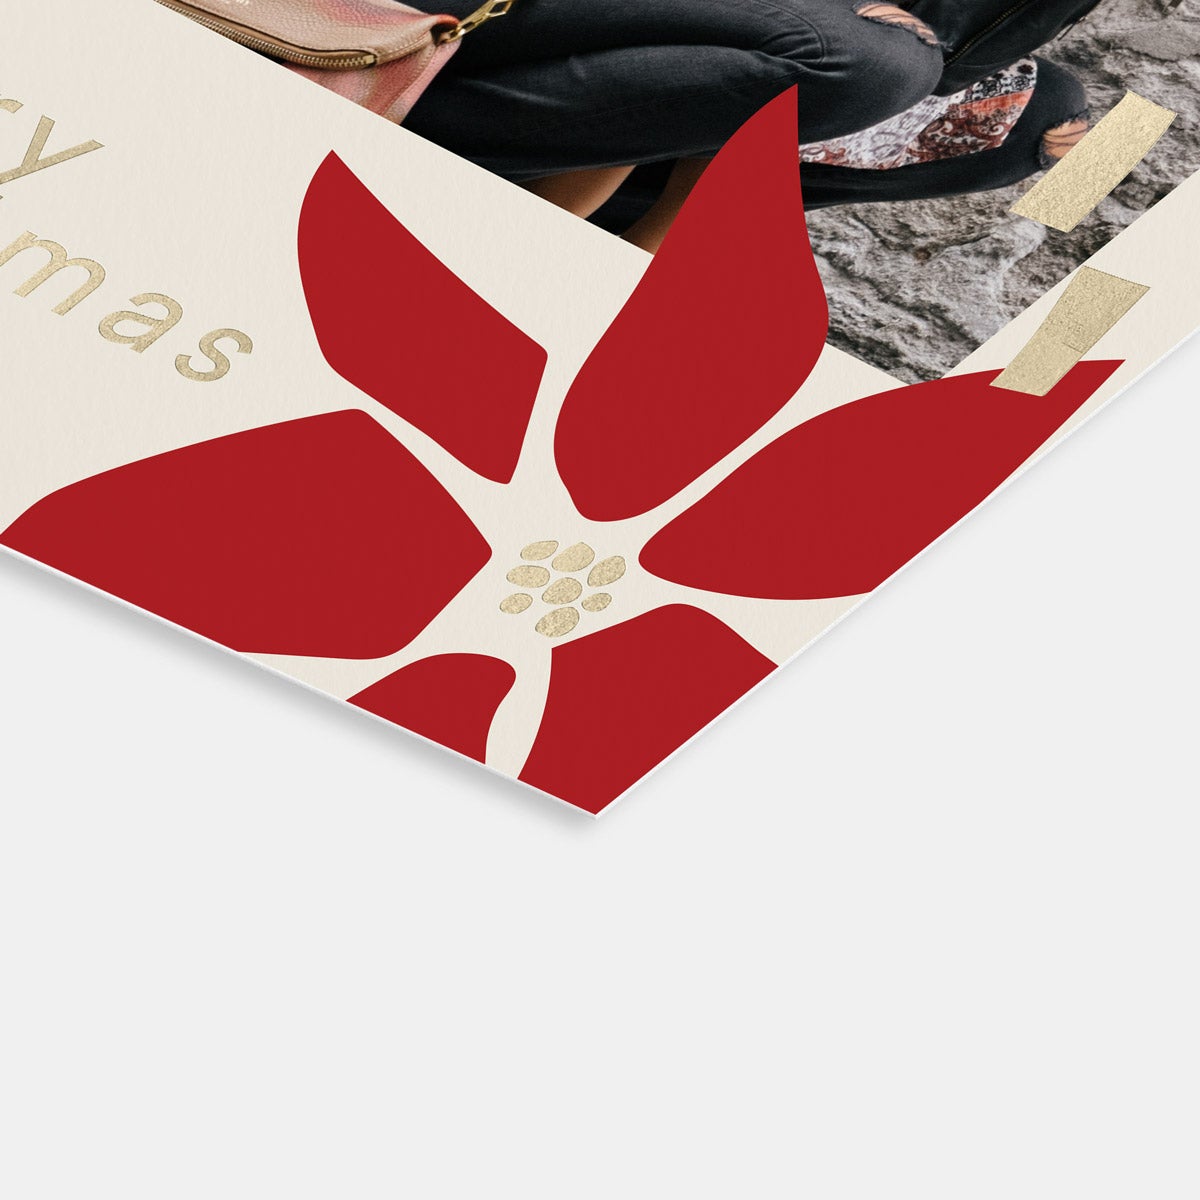 Abstract Poinsettia Holiday Card